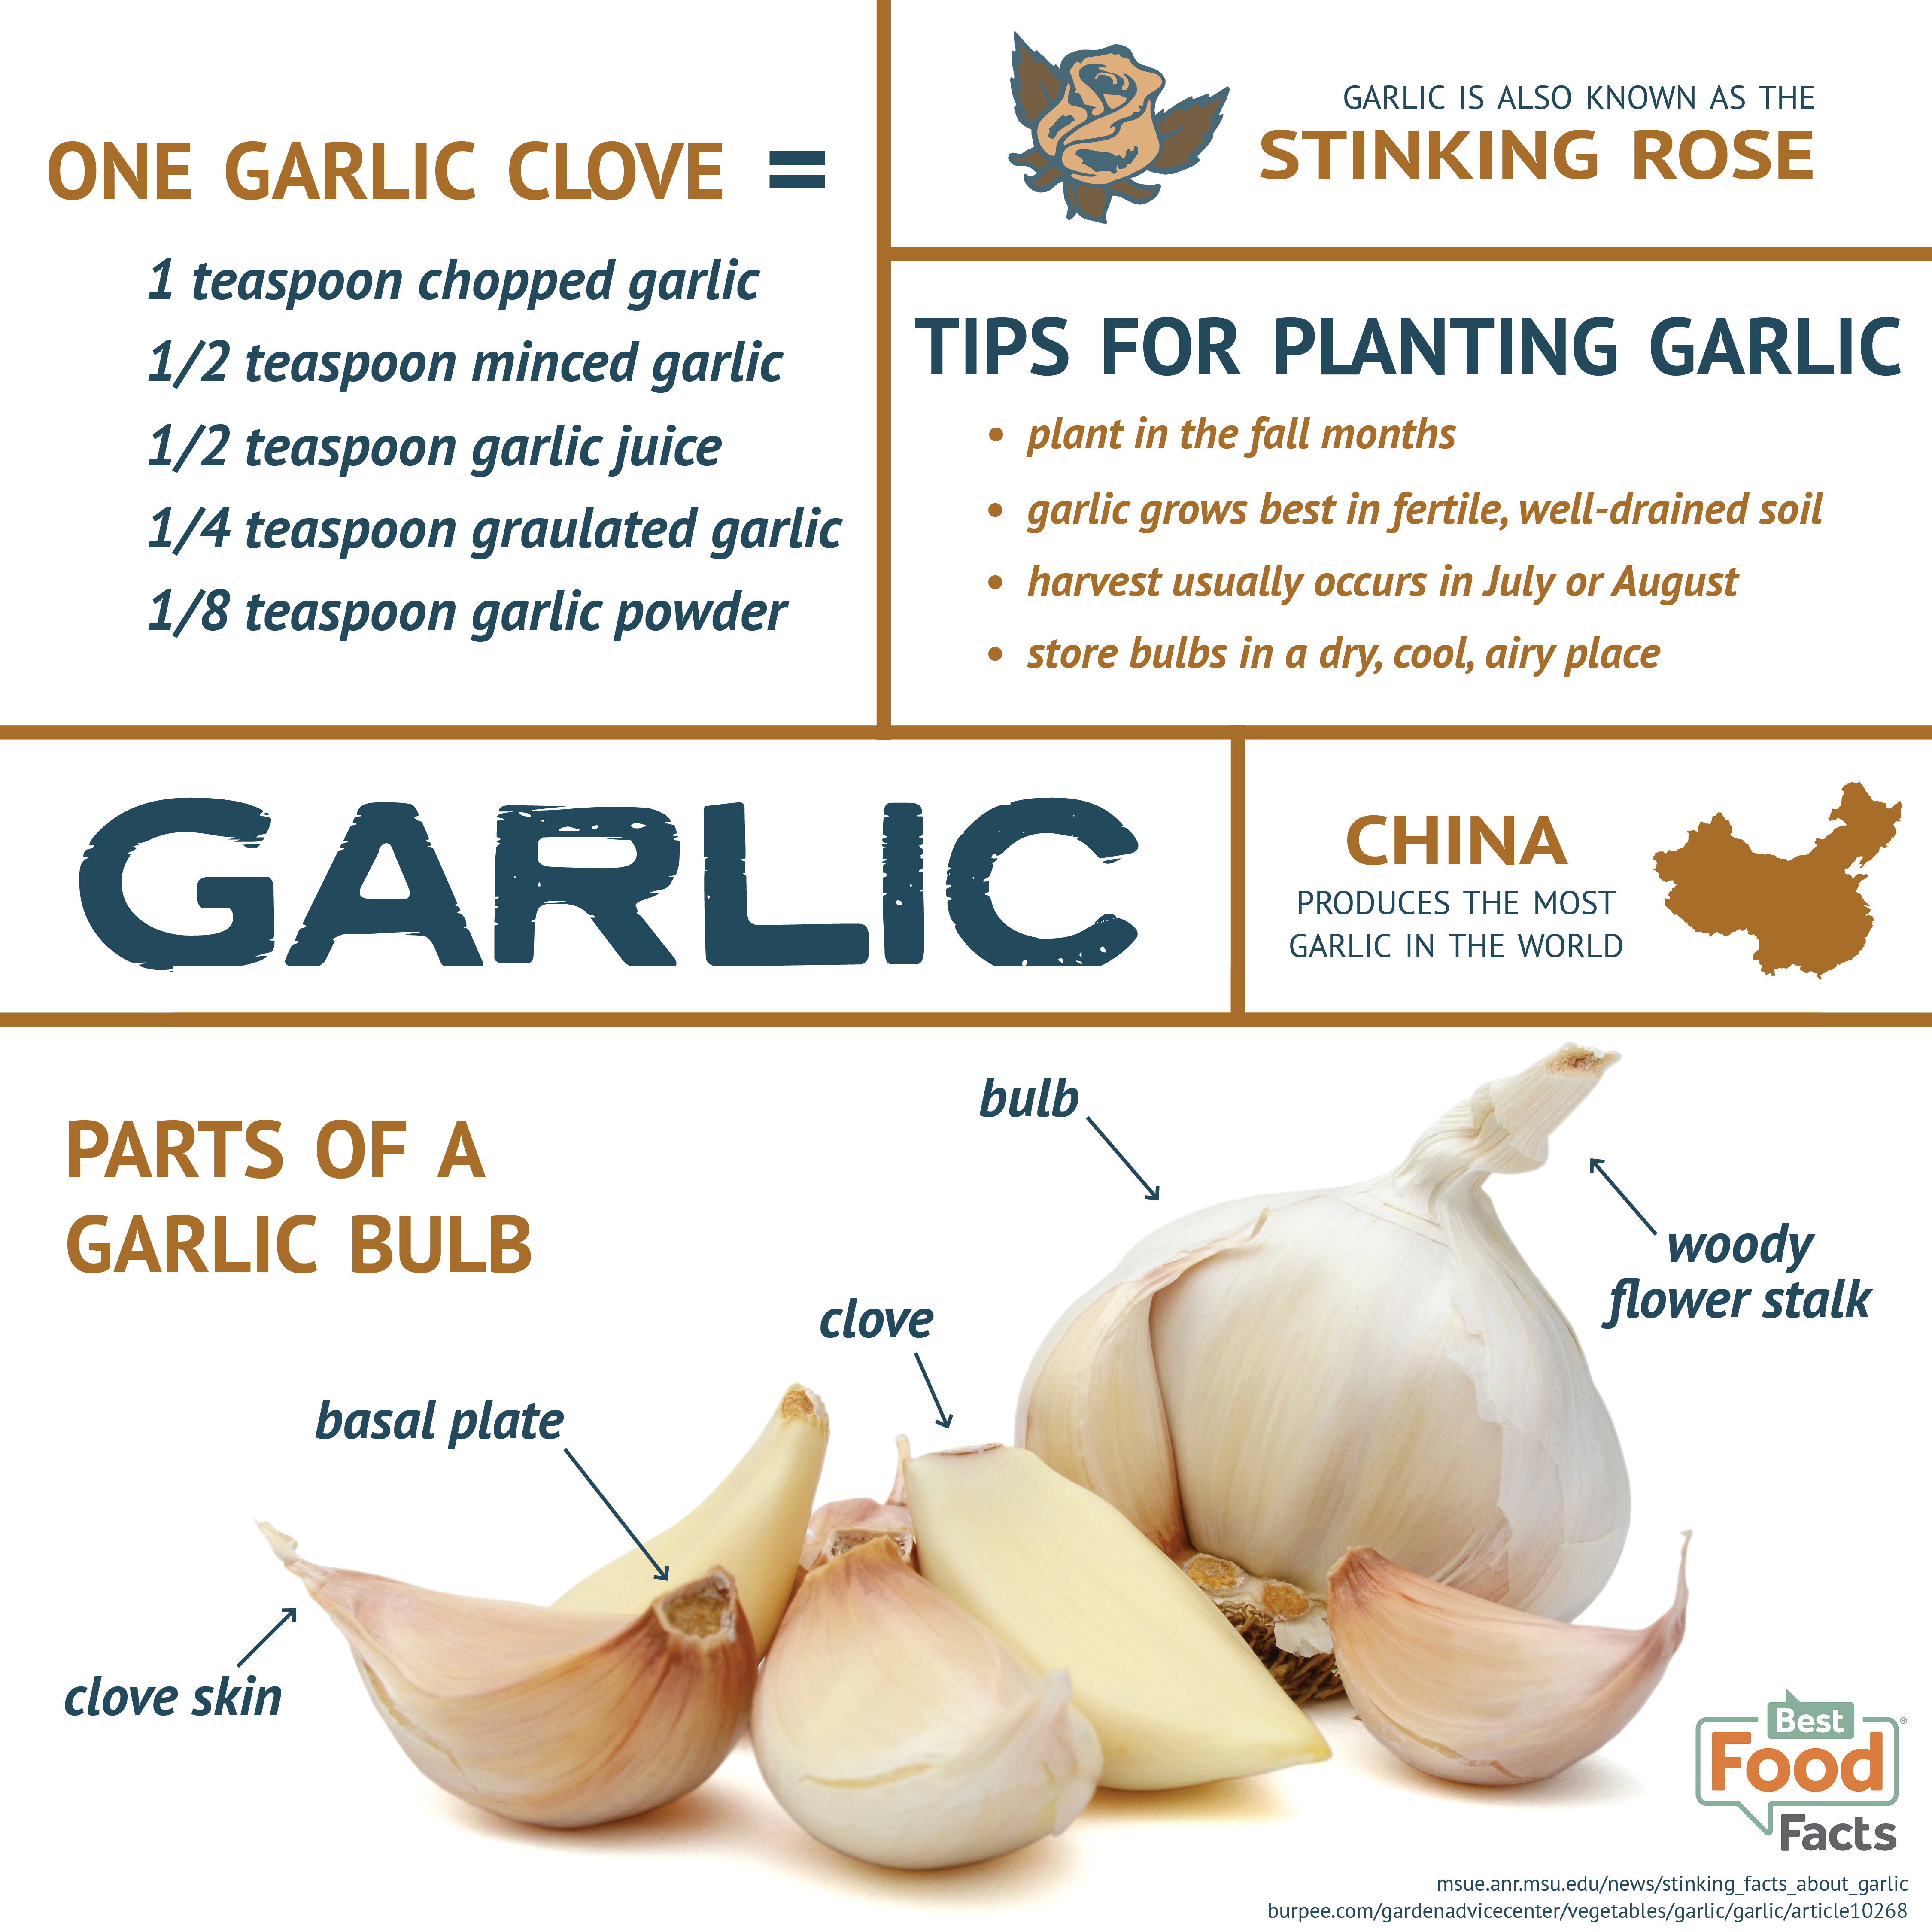 does garlic have health benefits? | bestfoodfacts